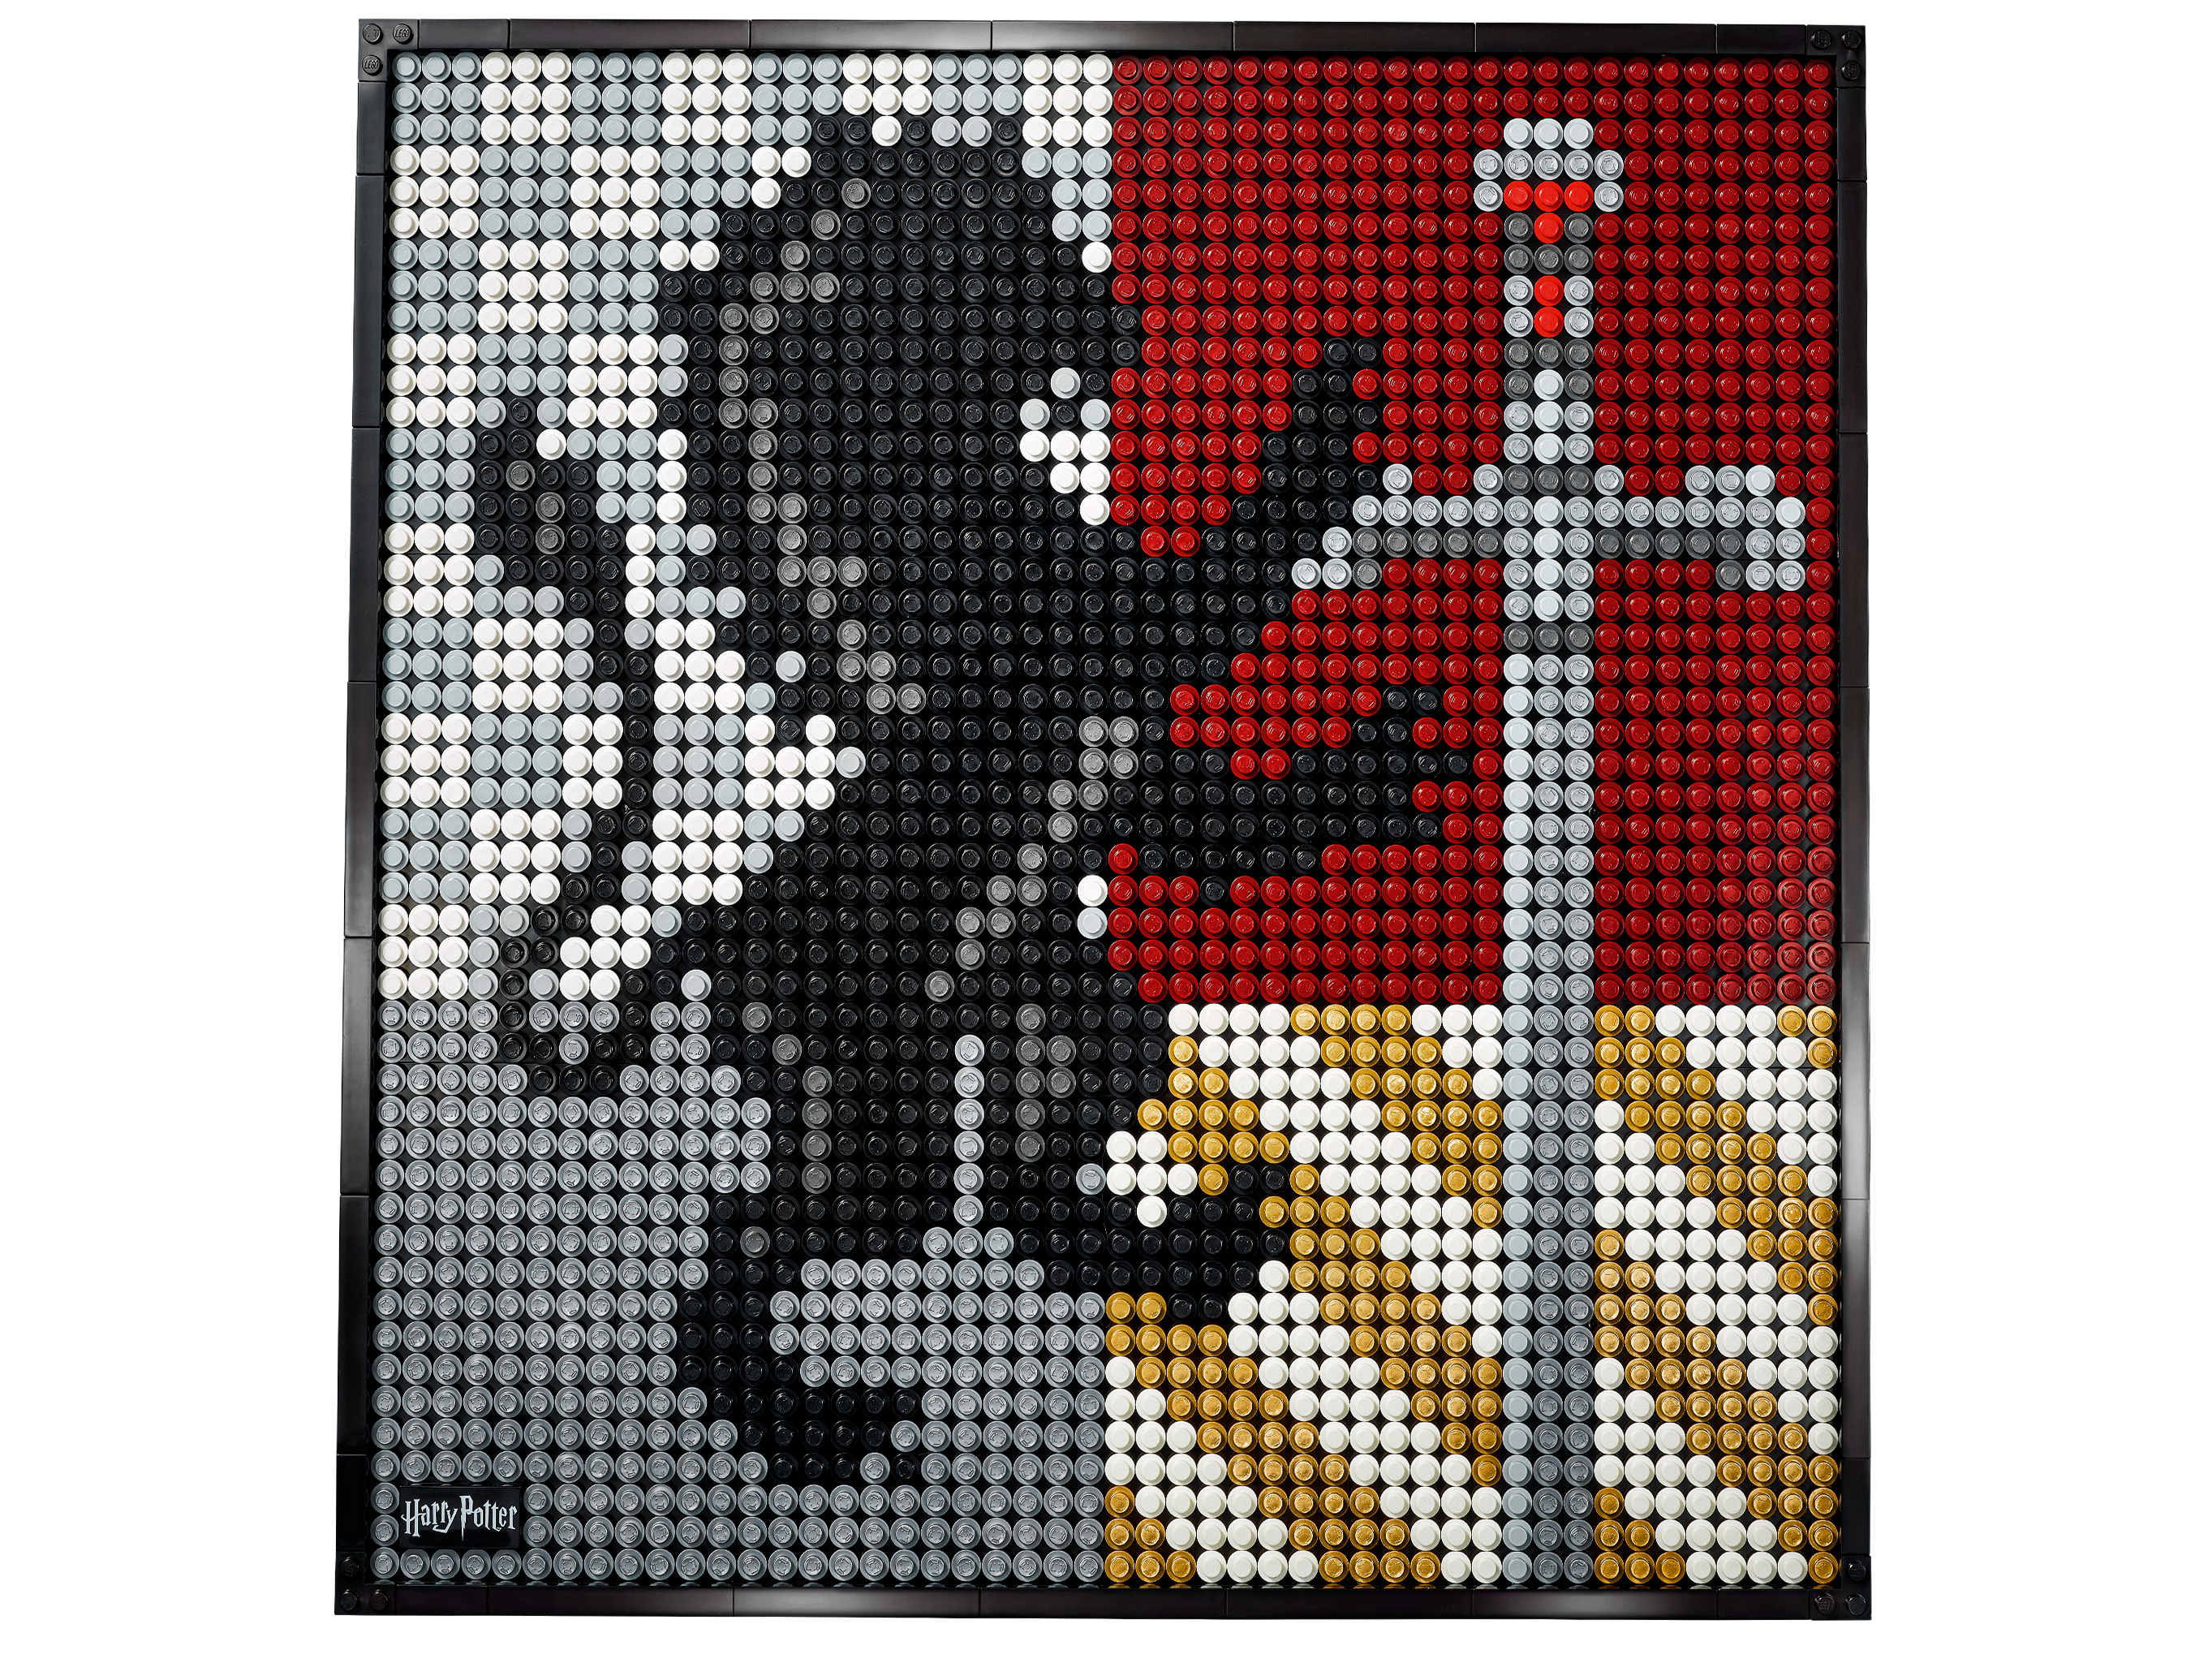 LEGO ART Mosaik 31201 Harry Potter Hogwarts Wappen 4249 Pieces N2/21 